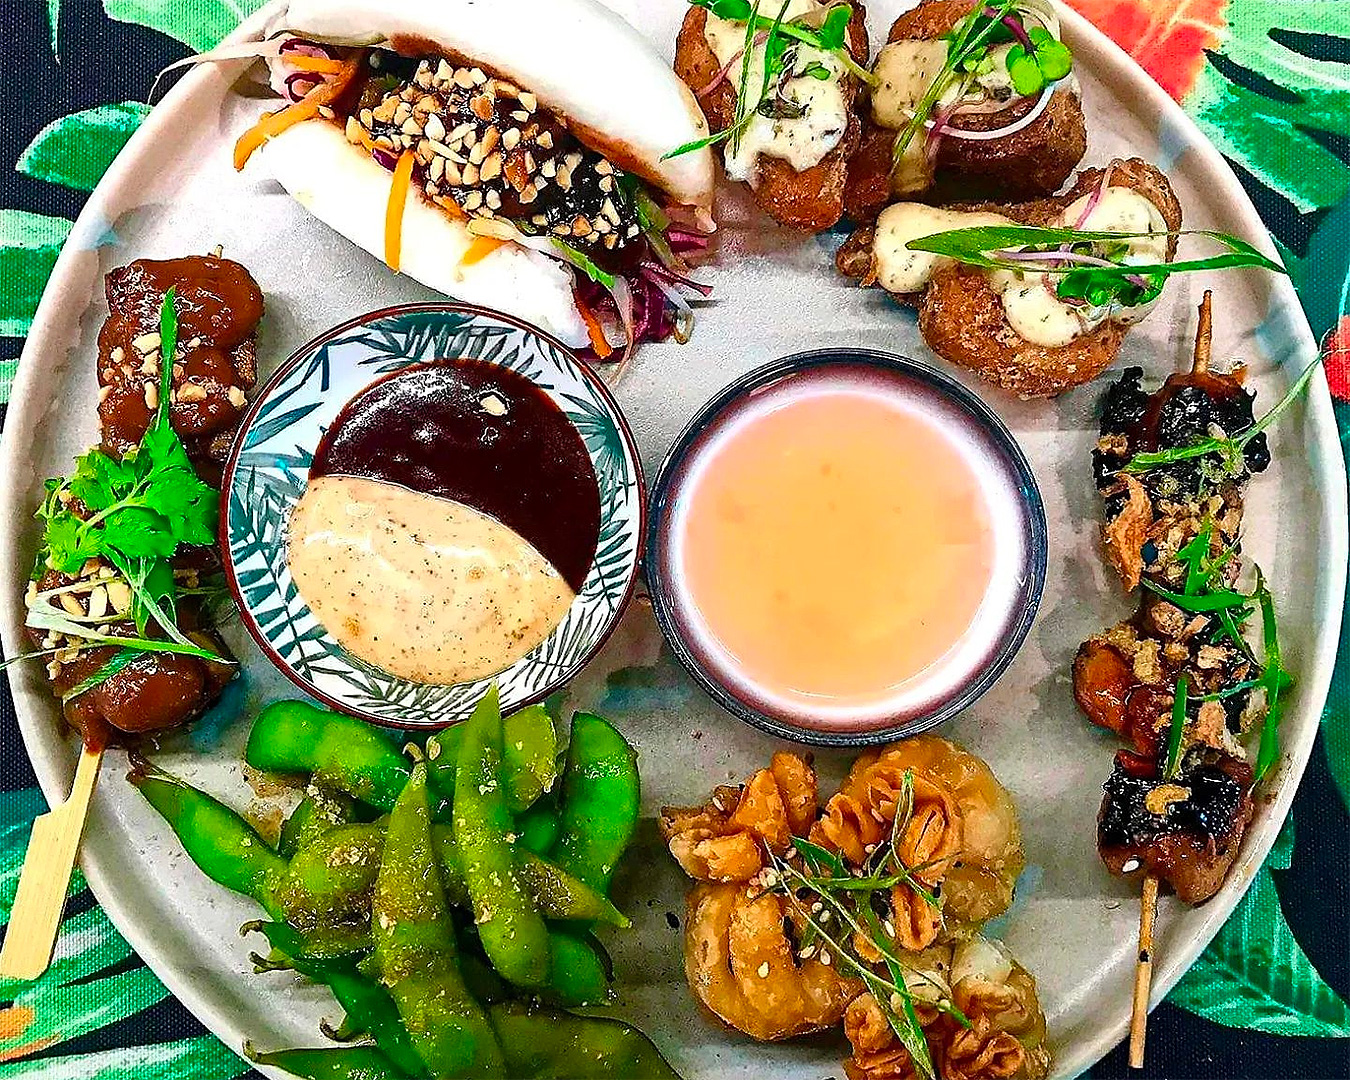 Taste of Asia tasting platter at The Hidden Village, one of the best Eat, Drink Love Ponsonby deals.